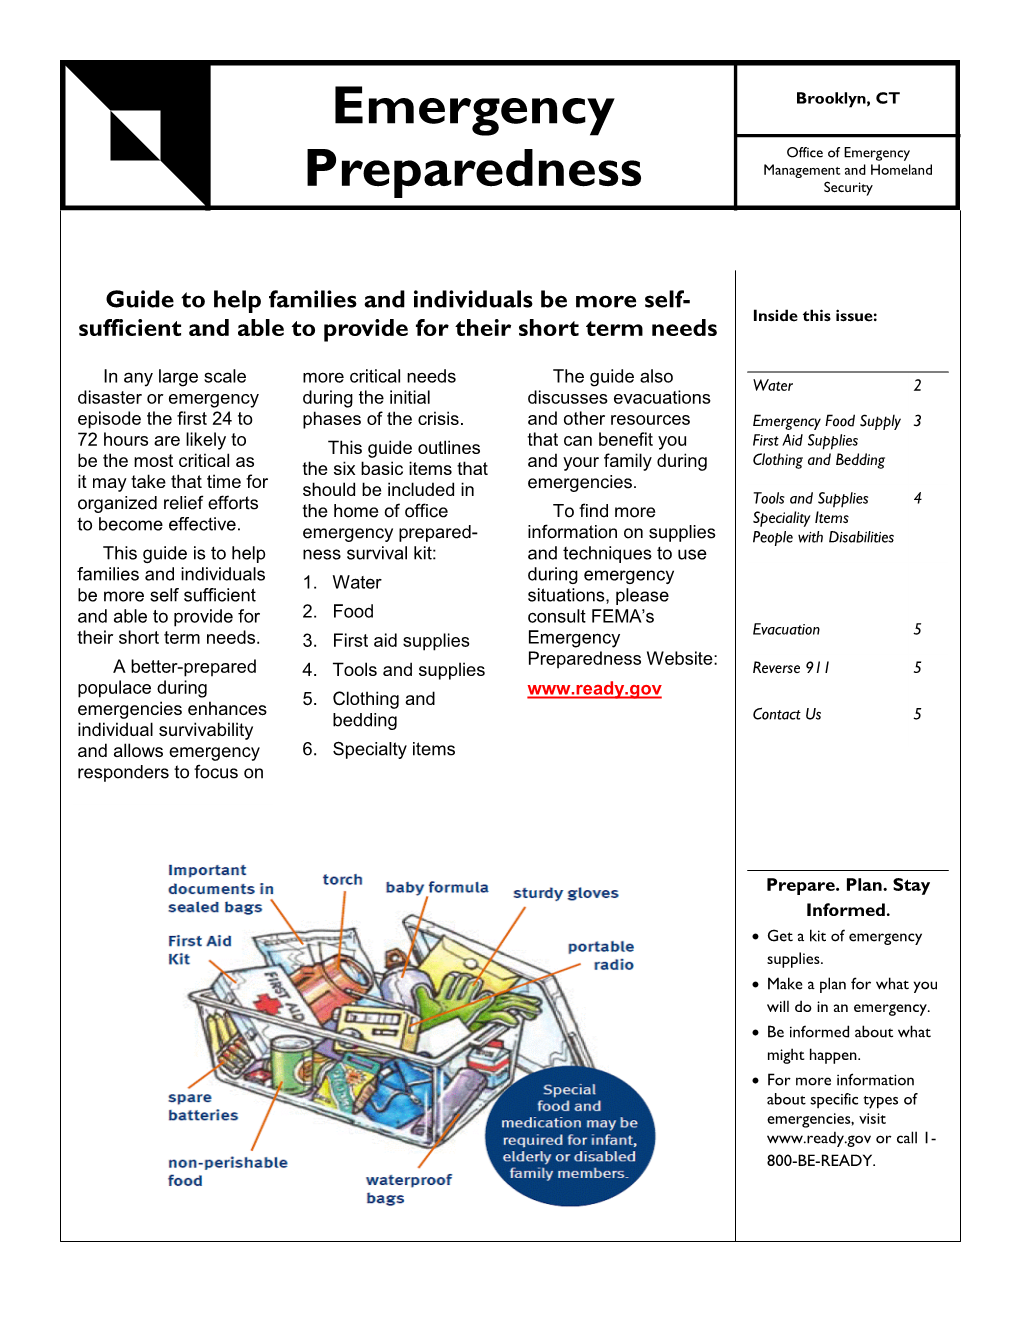 Emergency Preparedness Website: a Better-Prepared 4